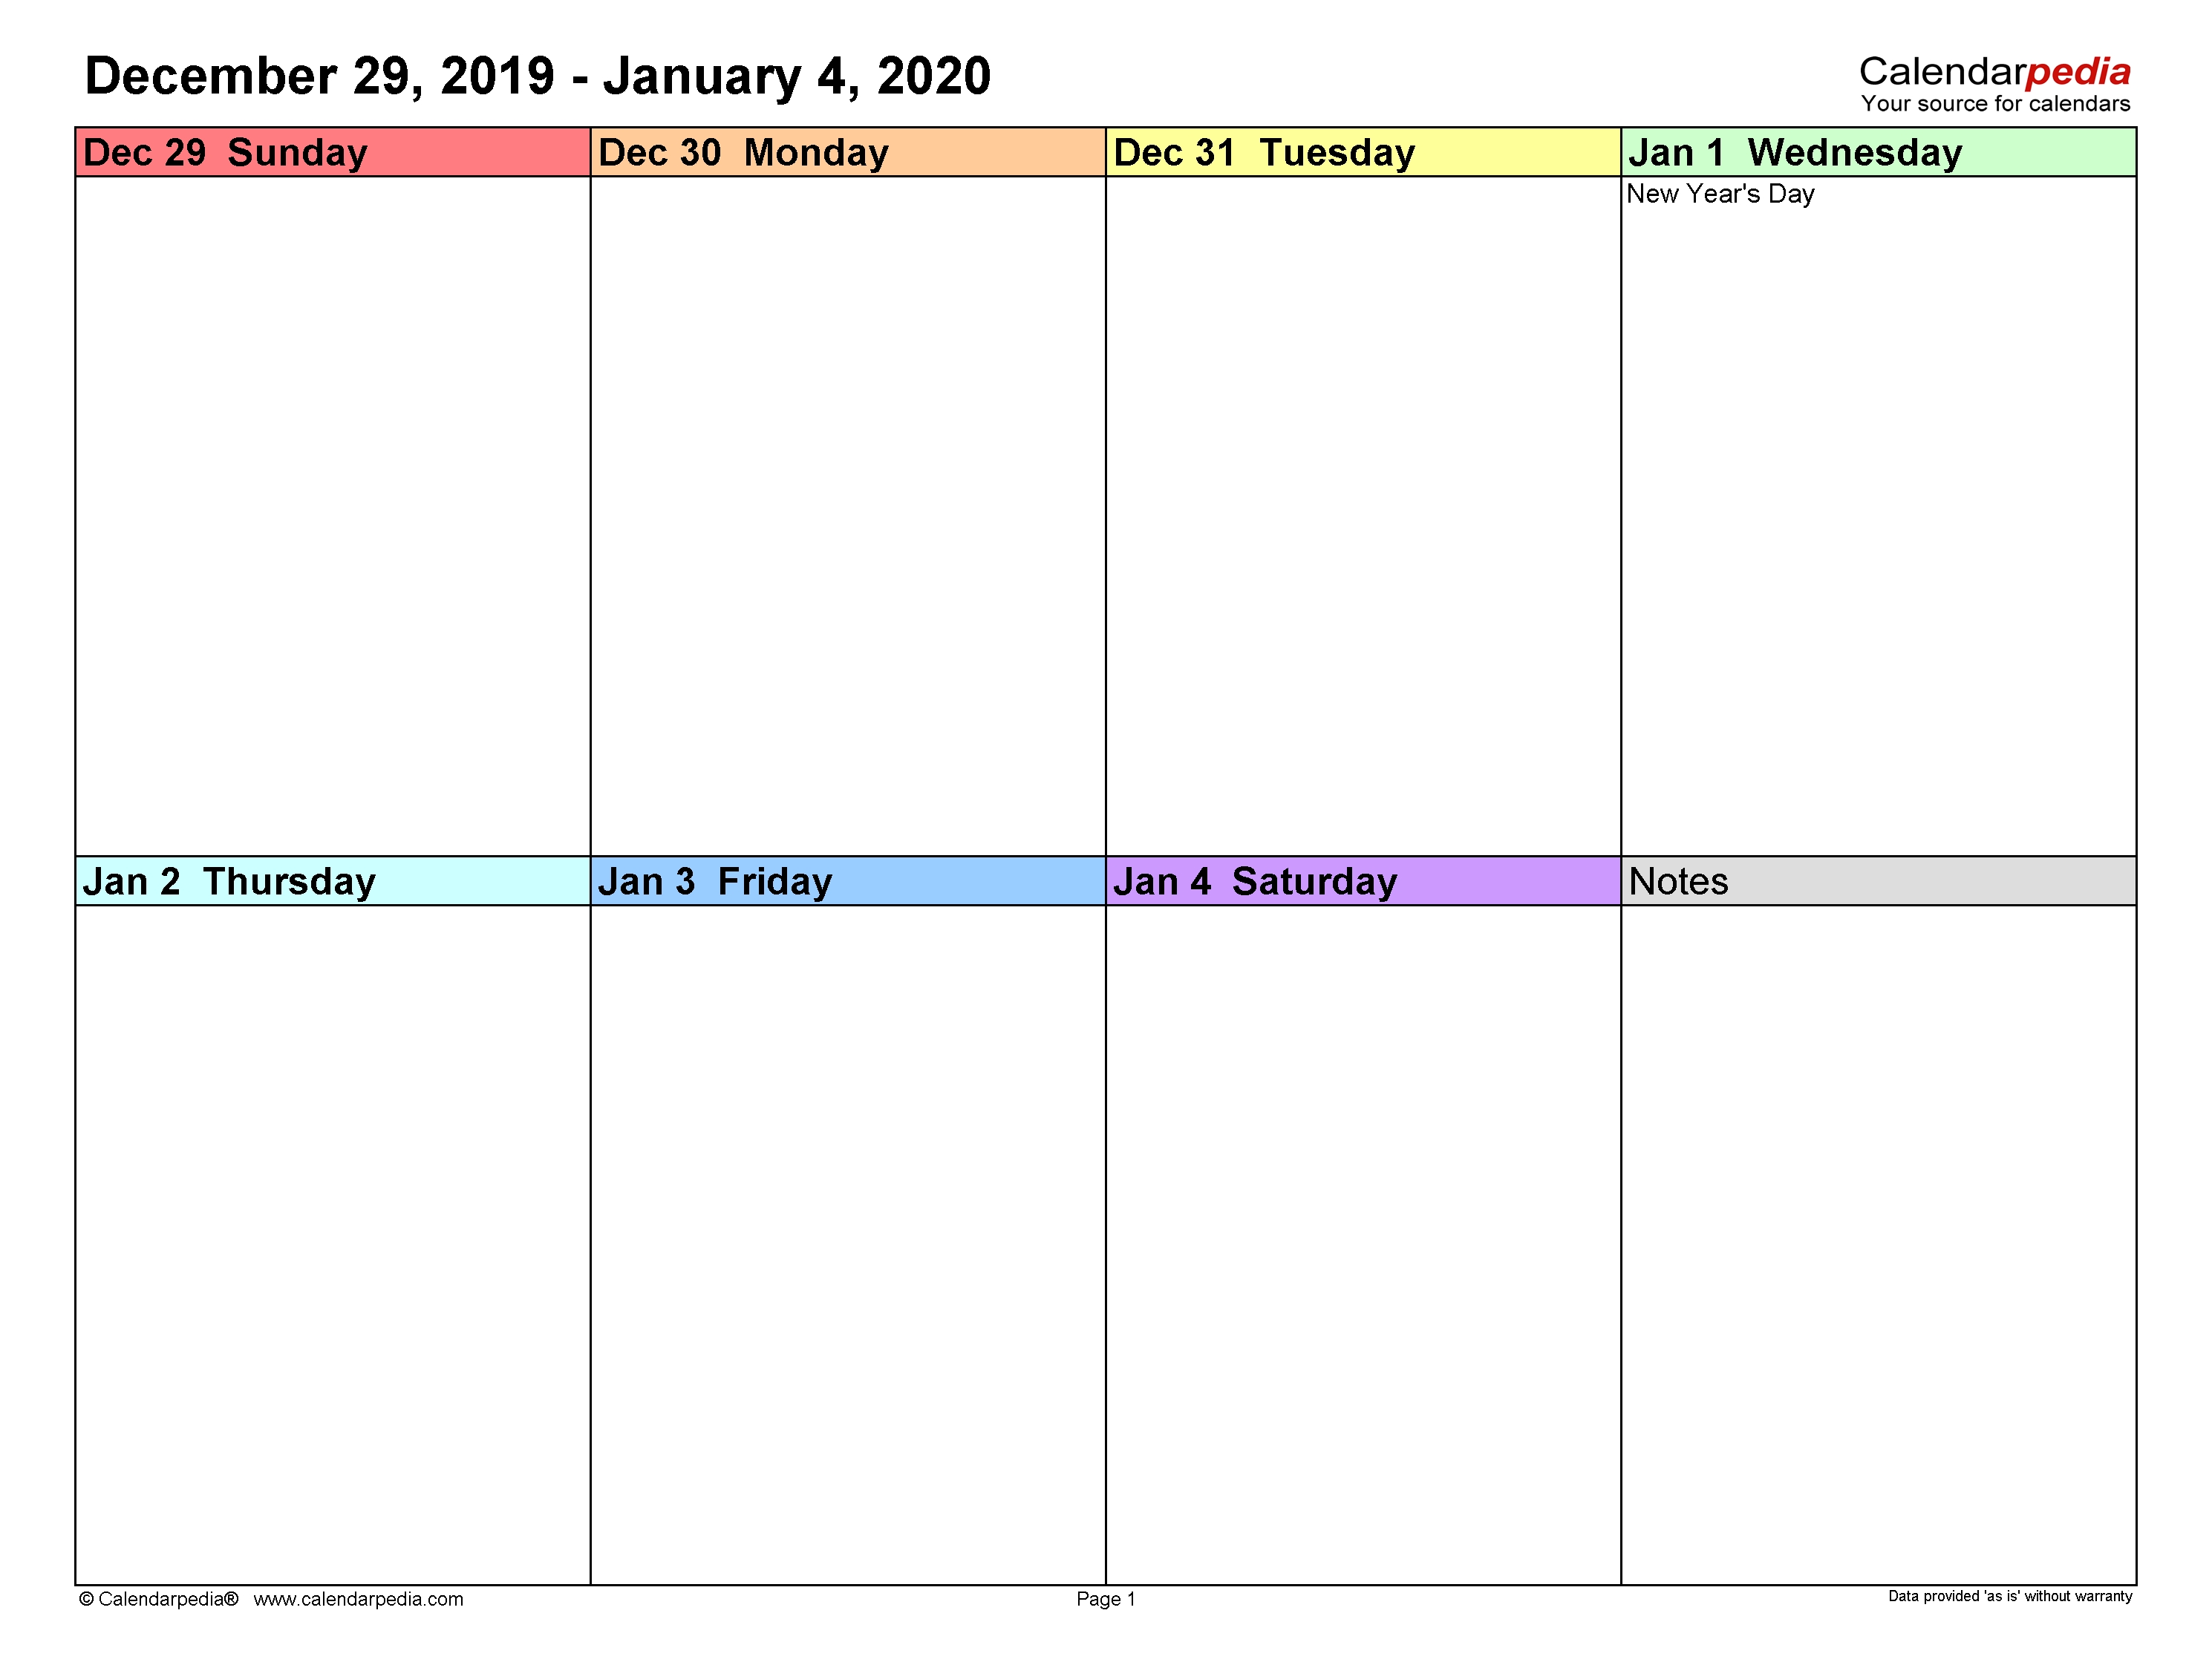 Weekly Calendars 2020 For Word - 12 Free Printable Templates Free Printable Calendar Templates Weekly